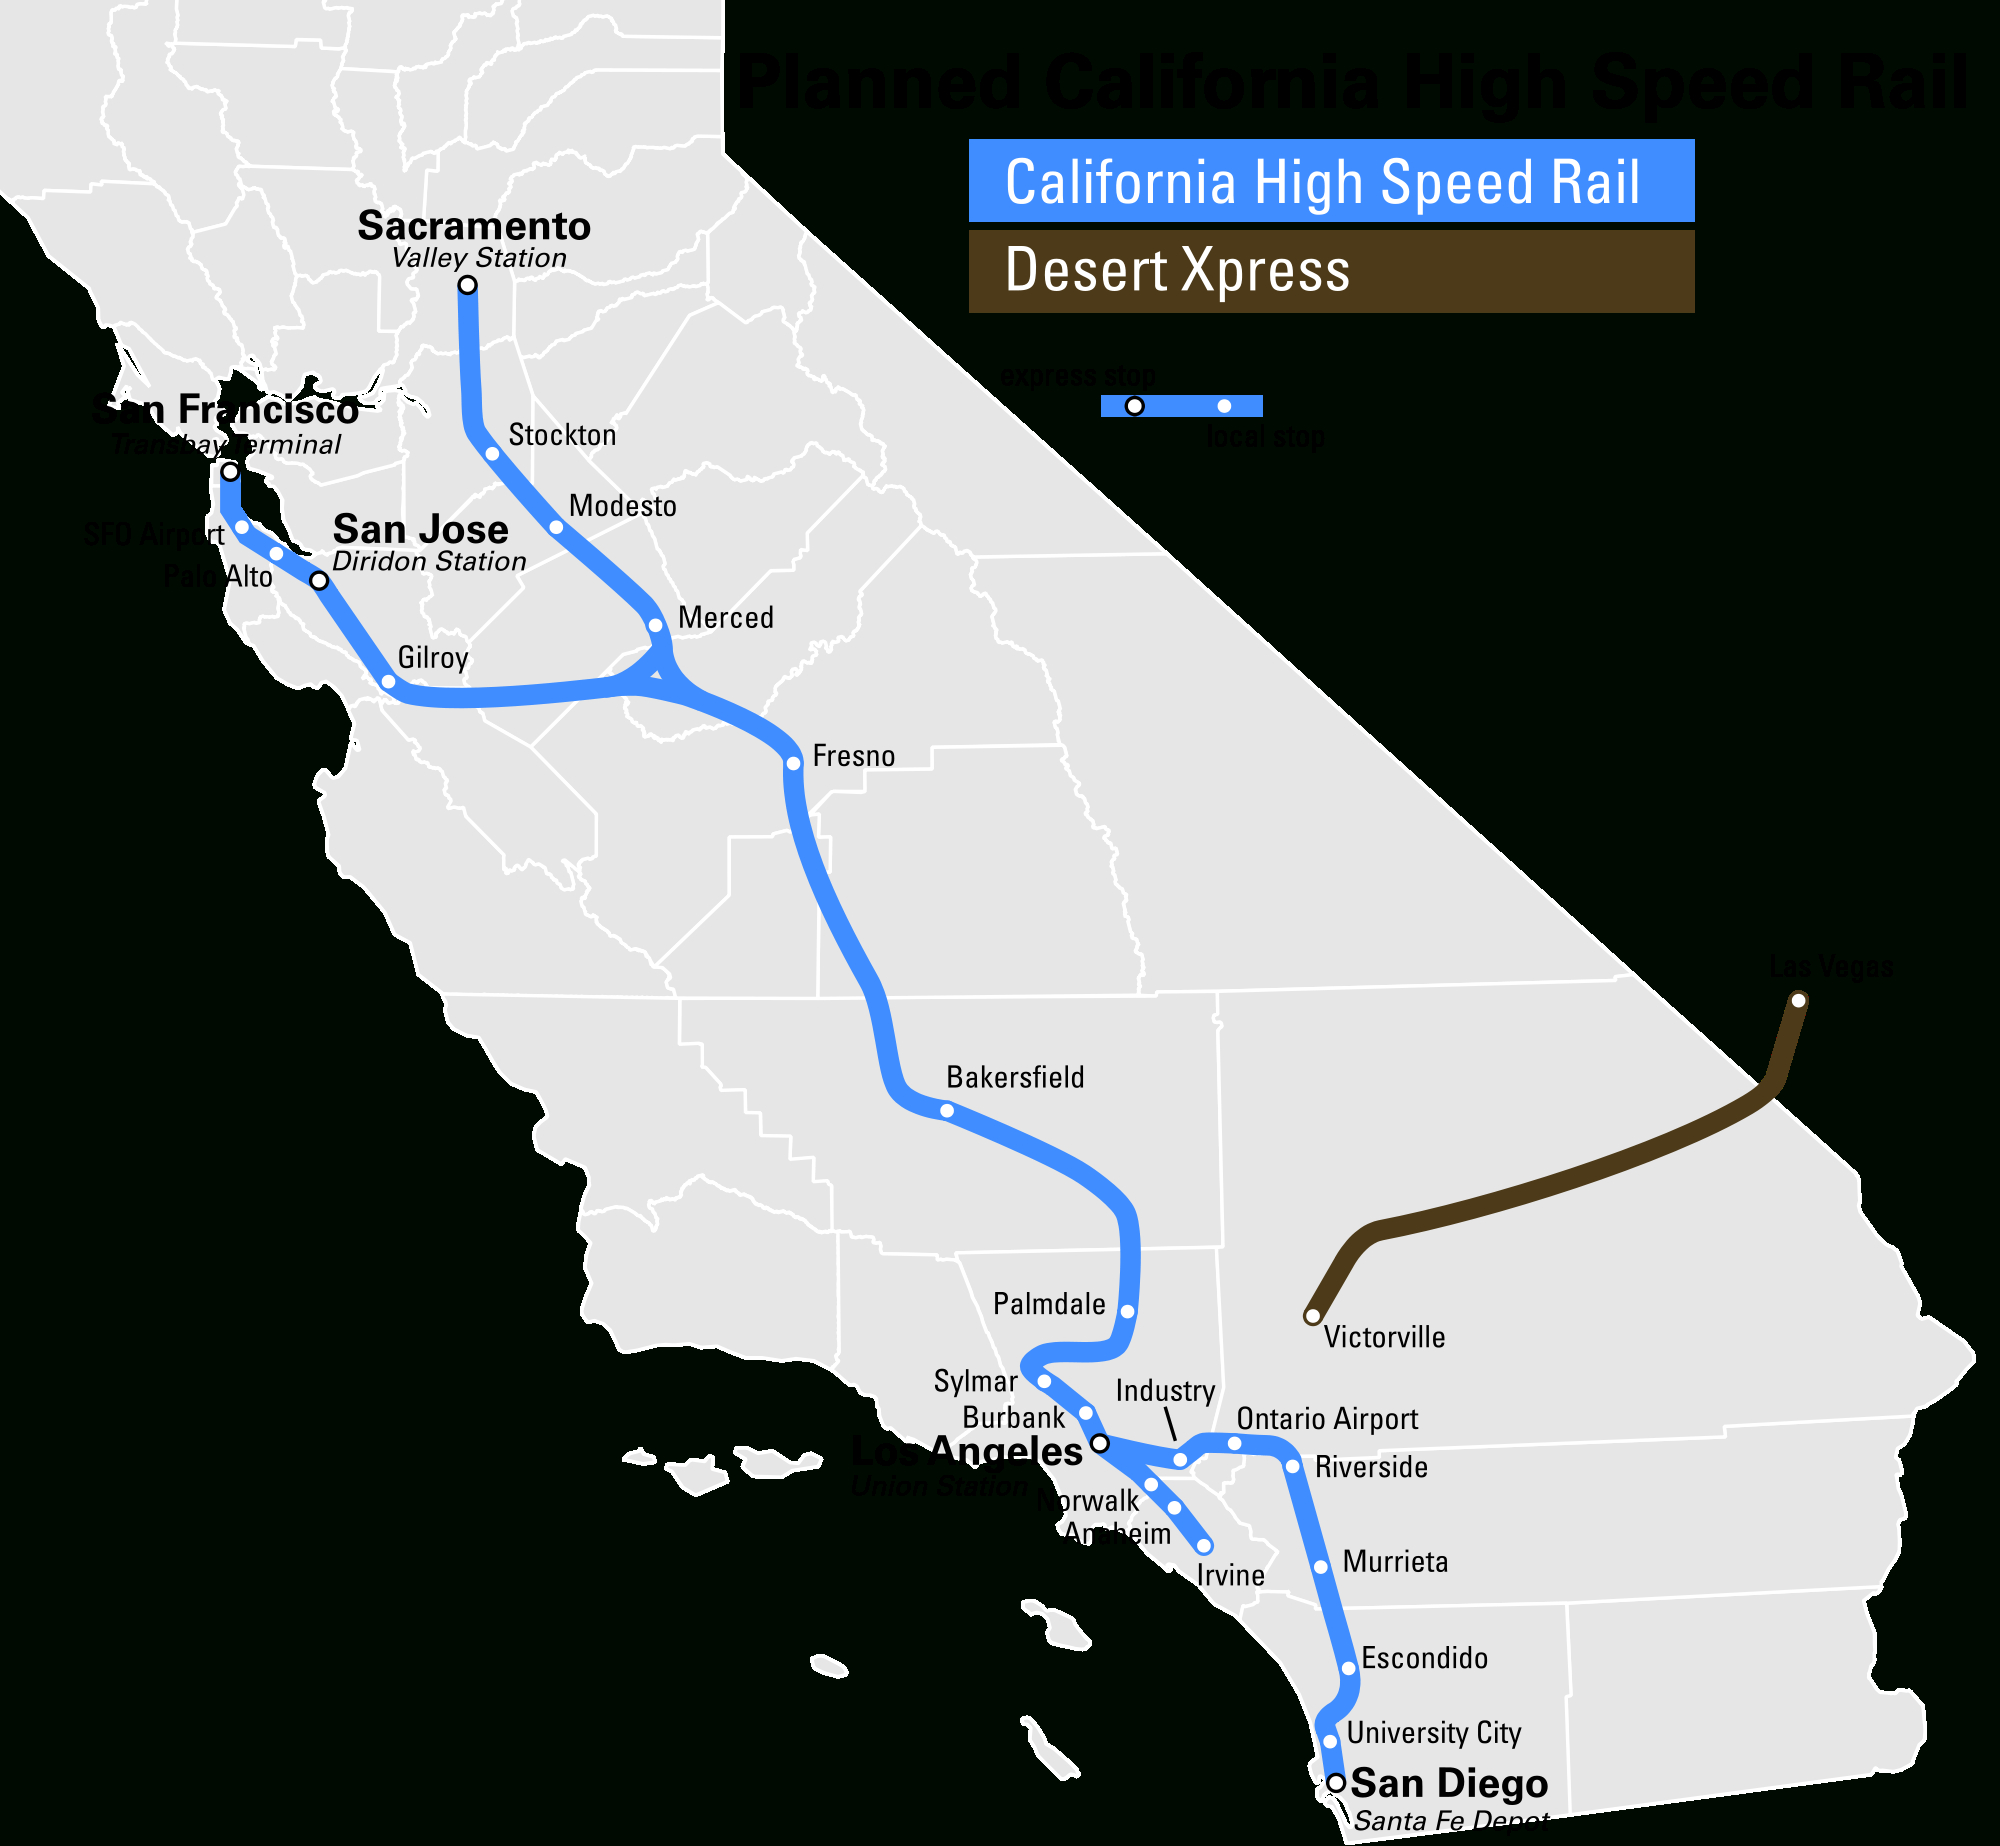 High Speed Rail To Las Vegas Breaks Ground 2017 - Canyon News - California Train Map